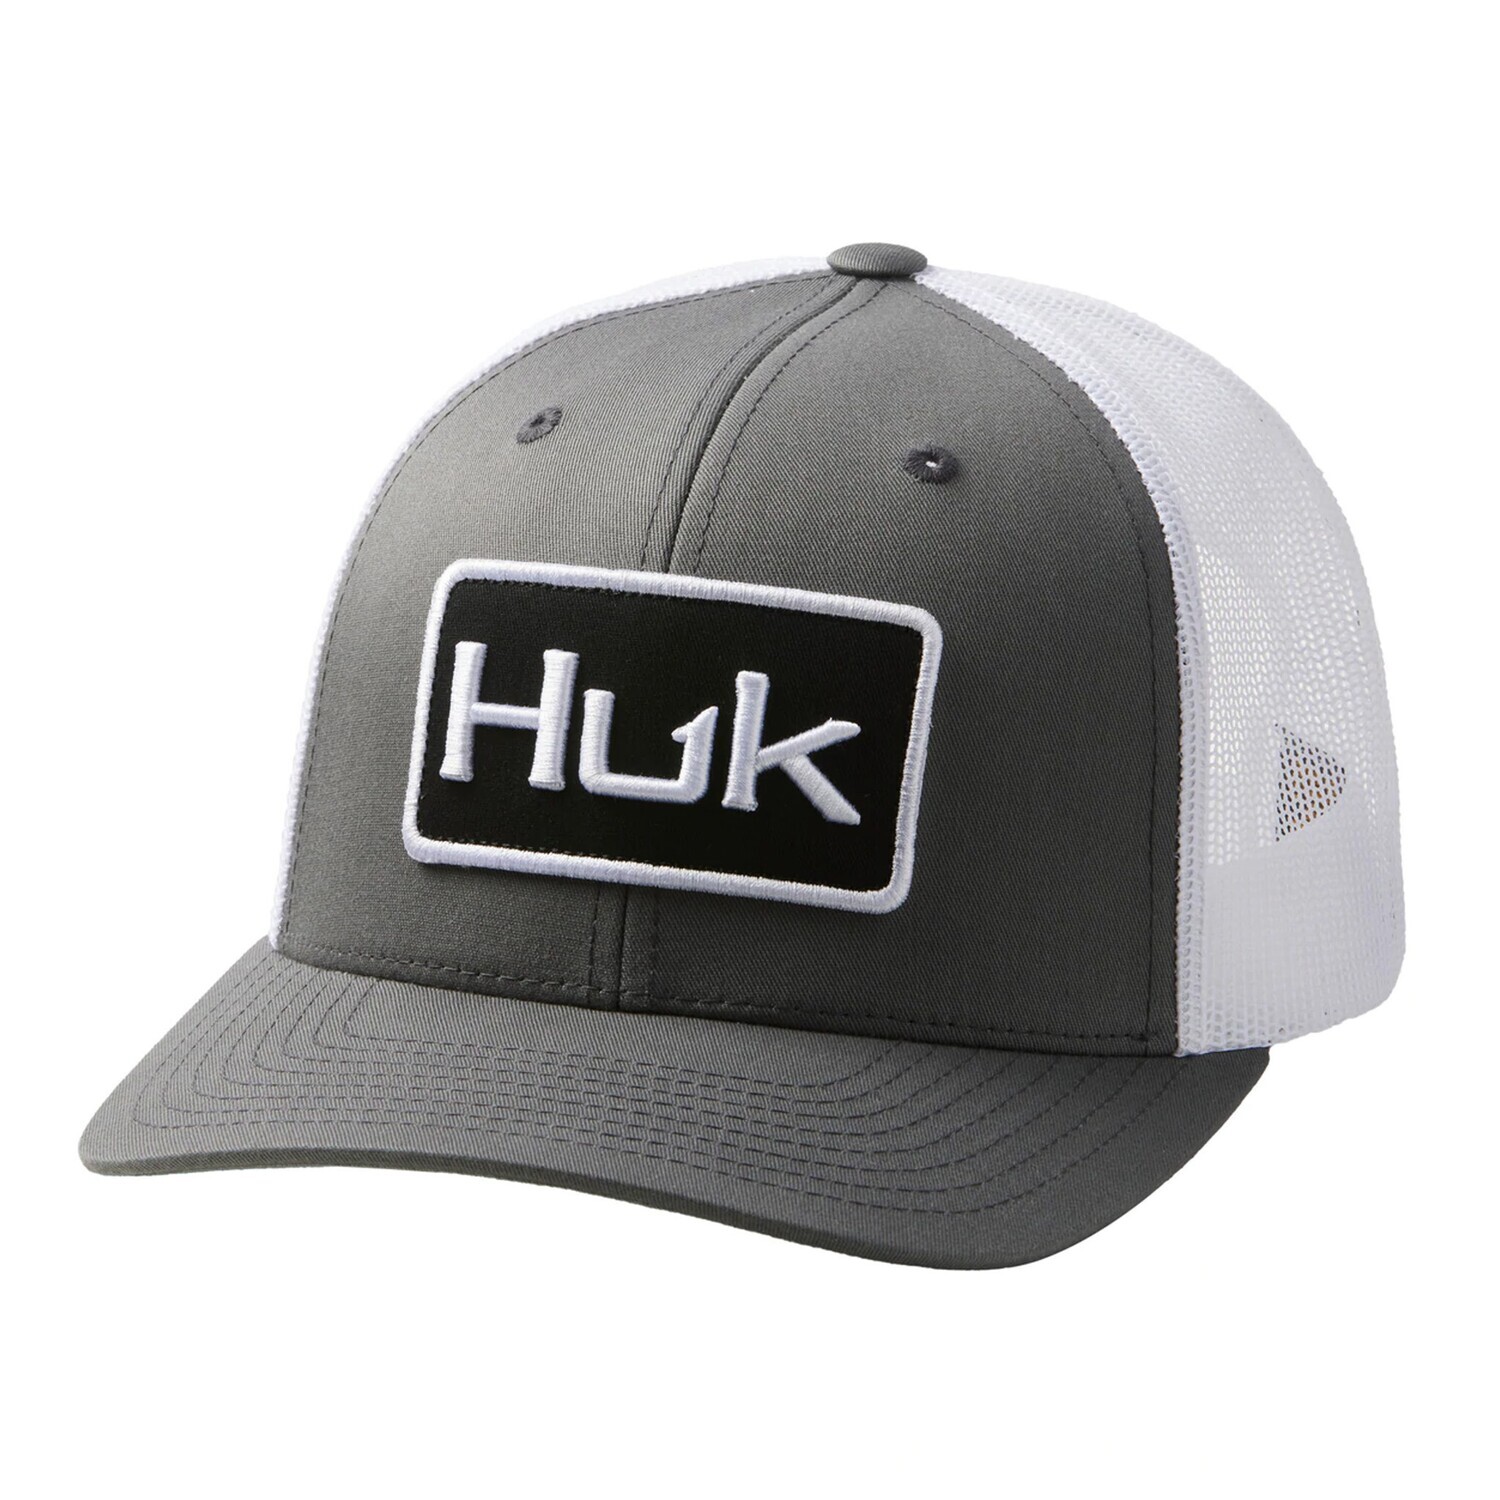 Huk Solid Trucker Mesh Back Cap